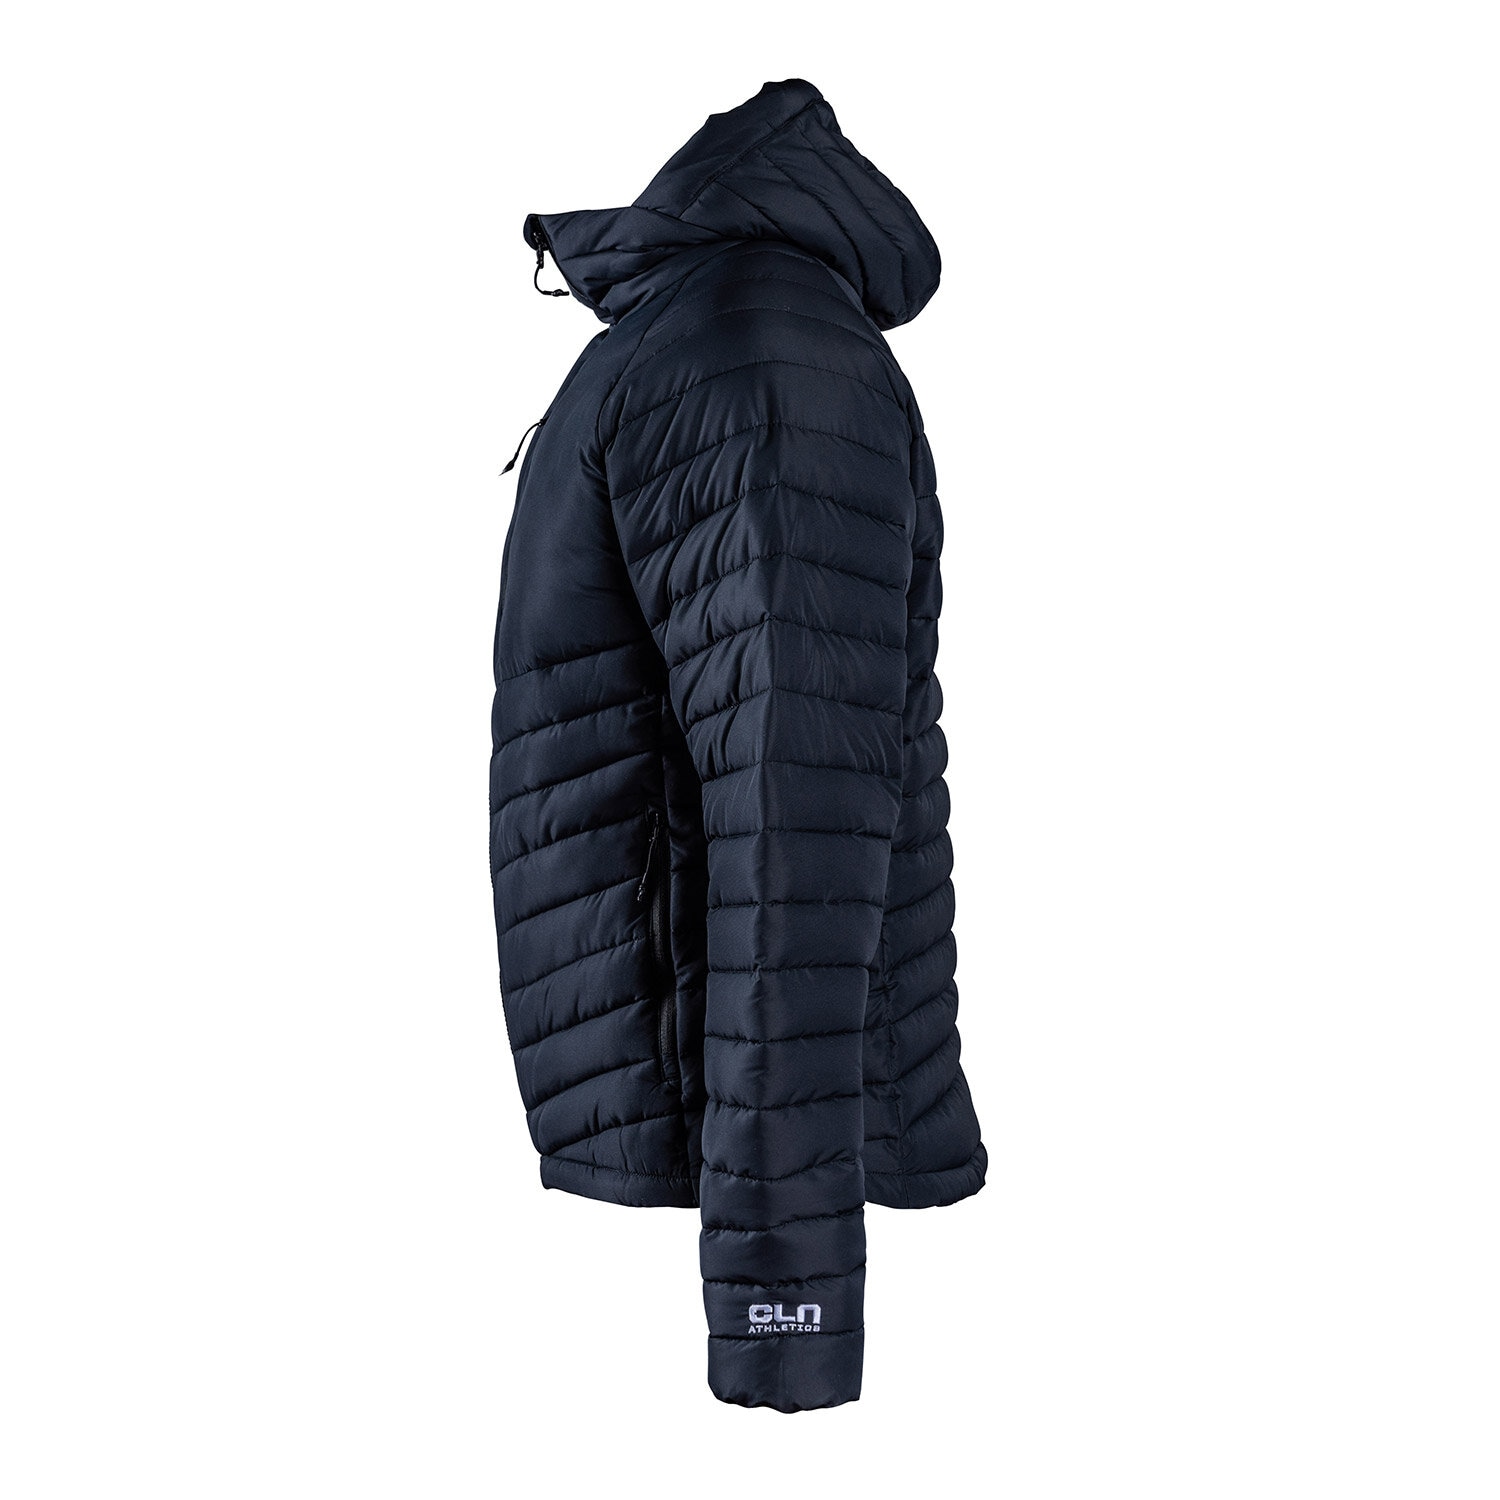 CLN Heat jacket Midnight black